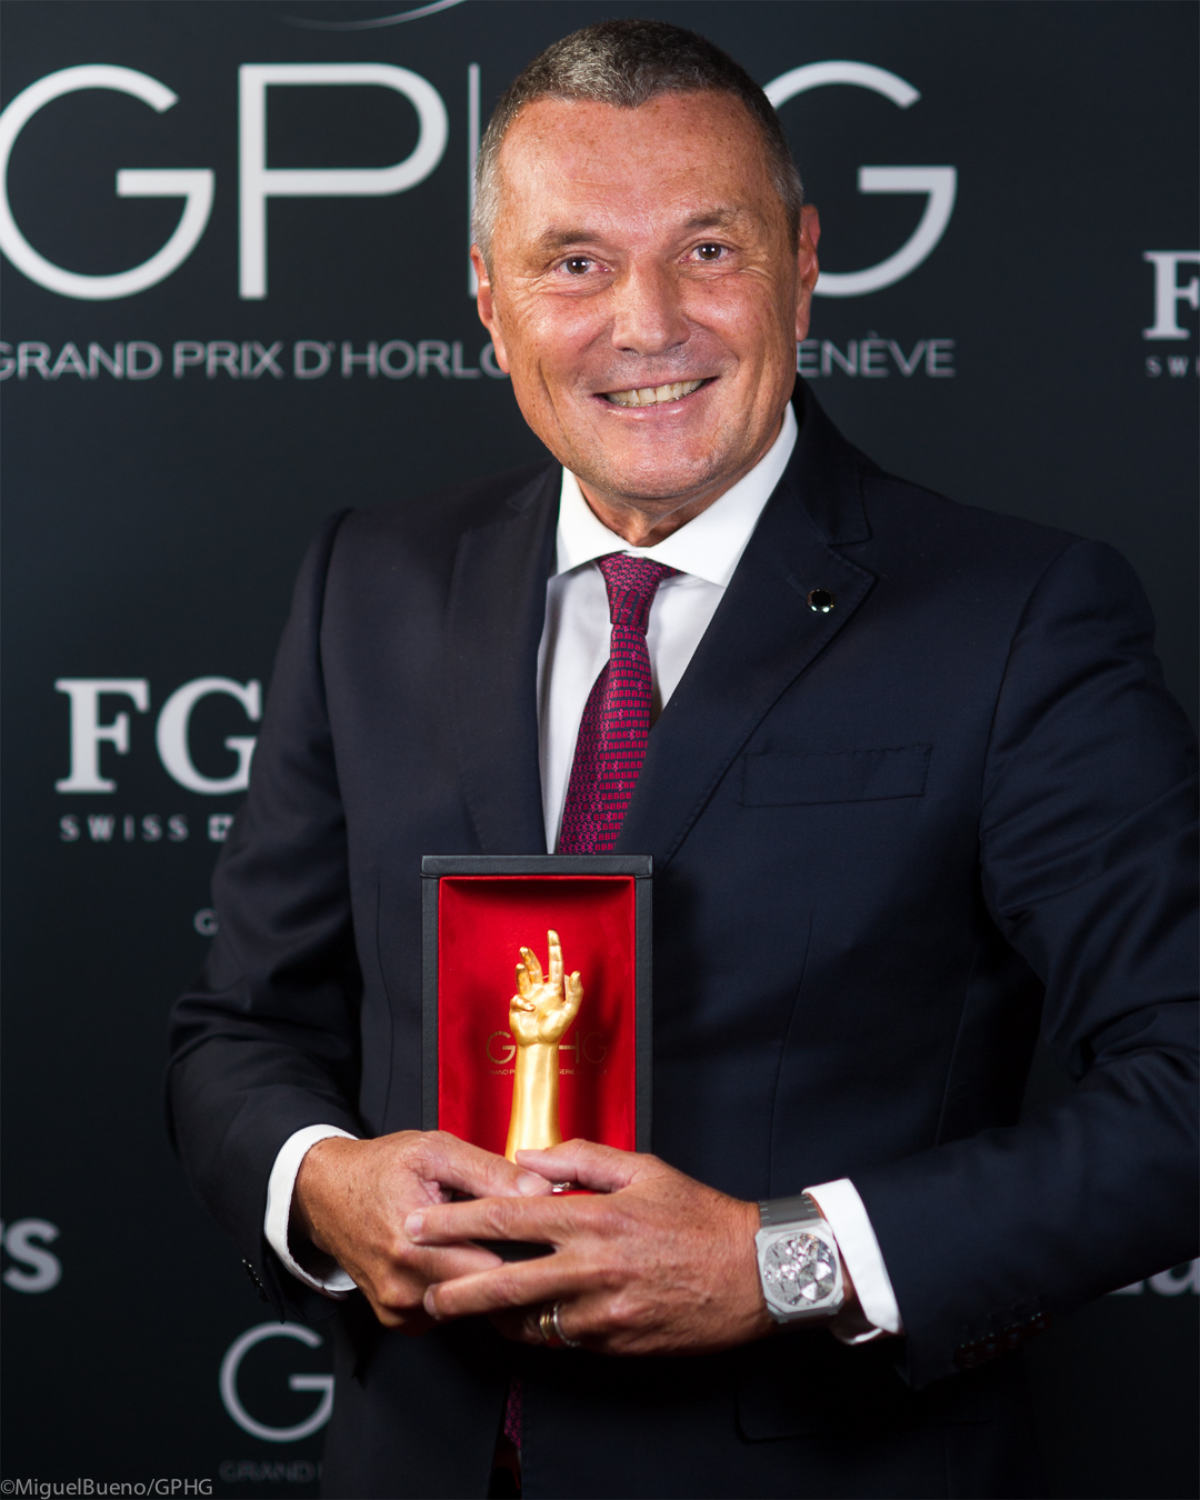 Bvlgari Sparkled At Grand Prix D’Horlogerie De Geneve 2022 With Two Prestigious Awards